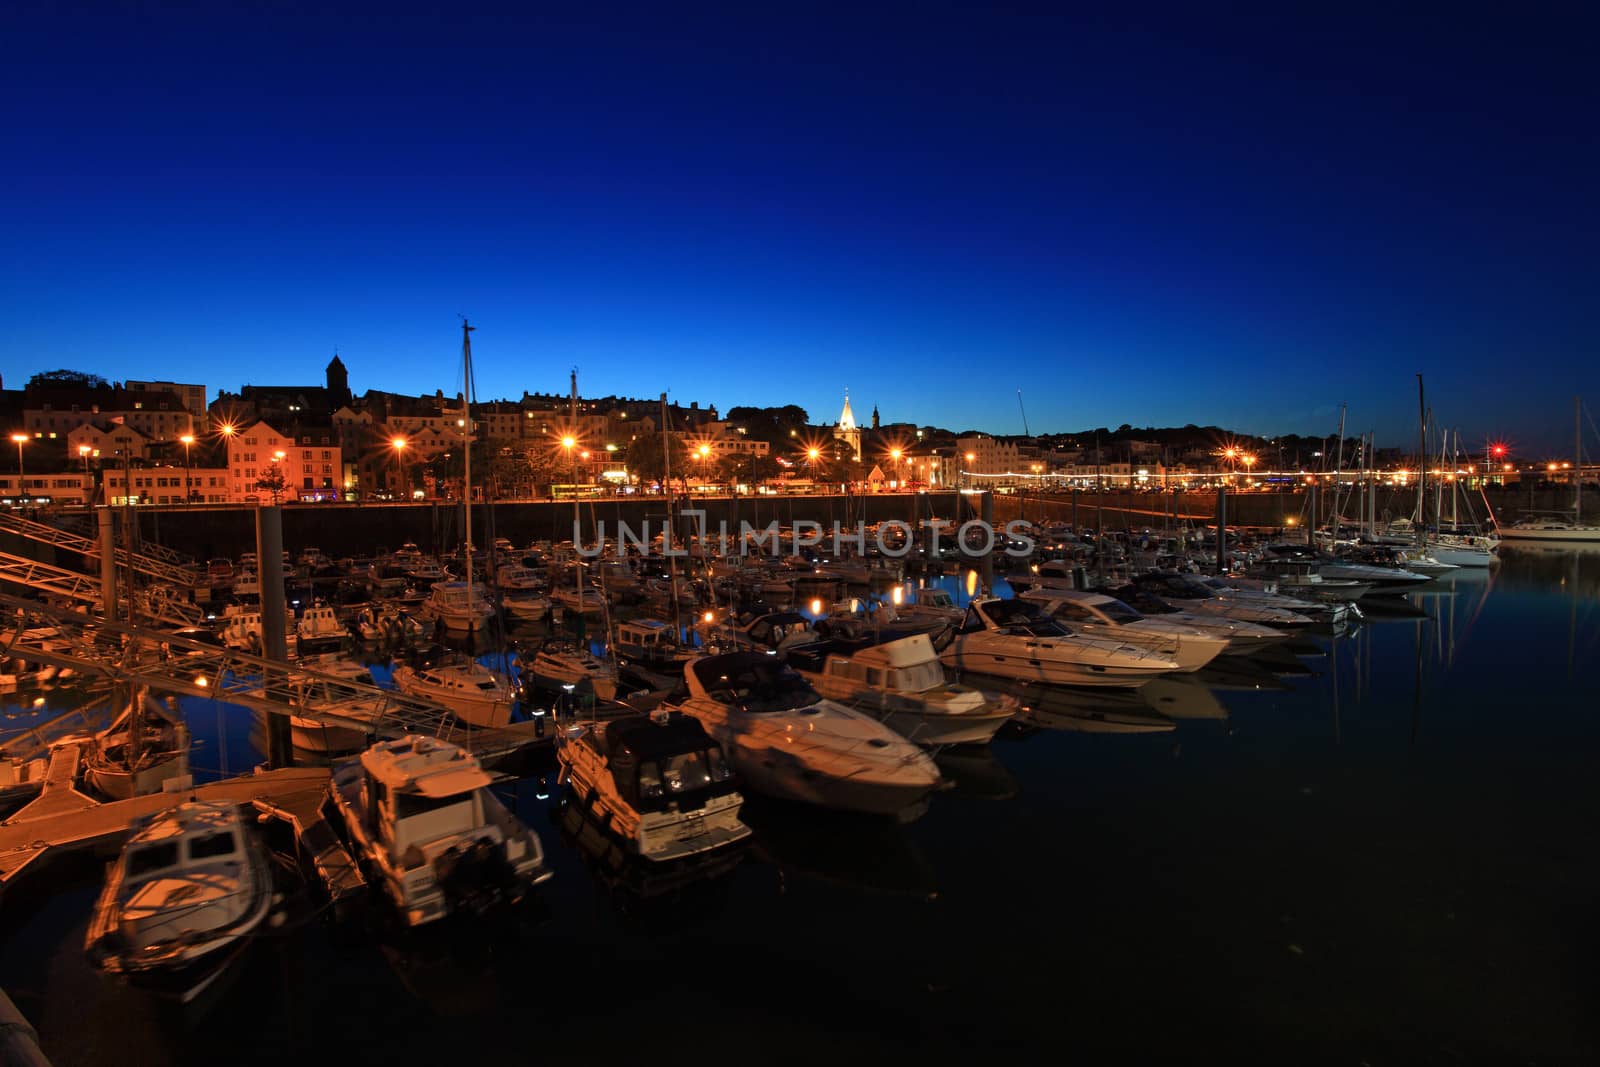 Guernsey St Peter Port by olliemt